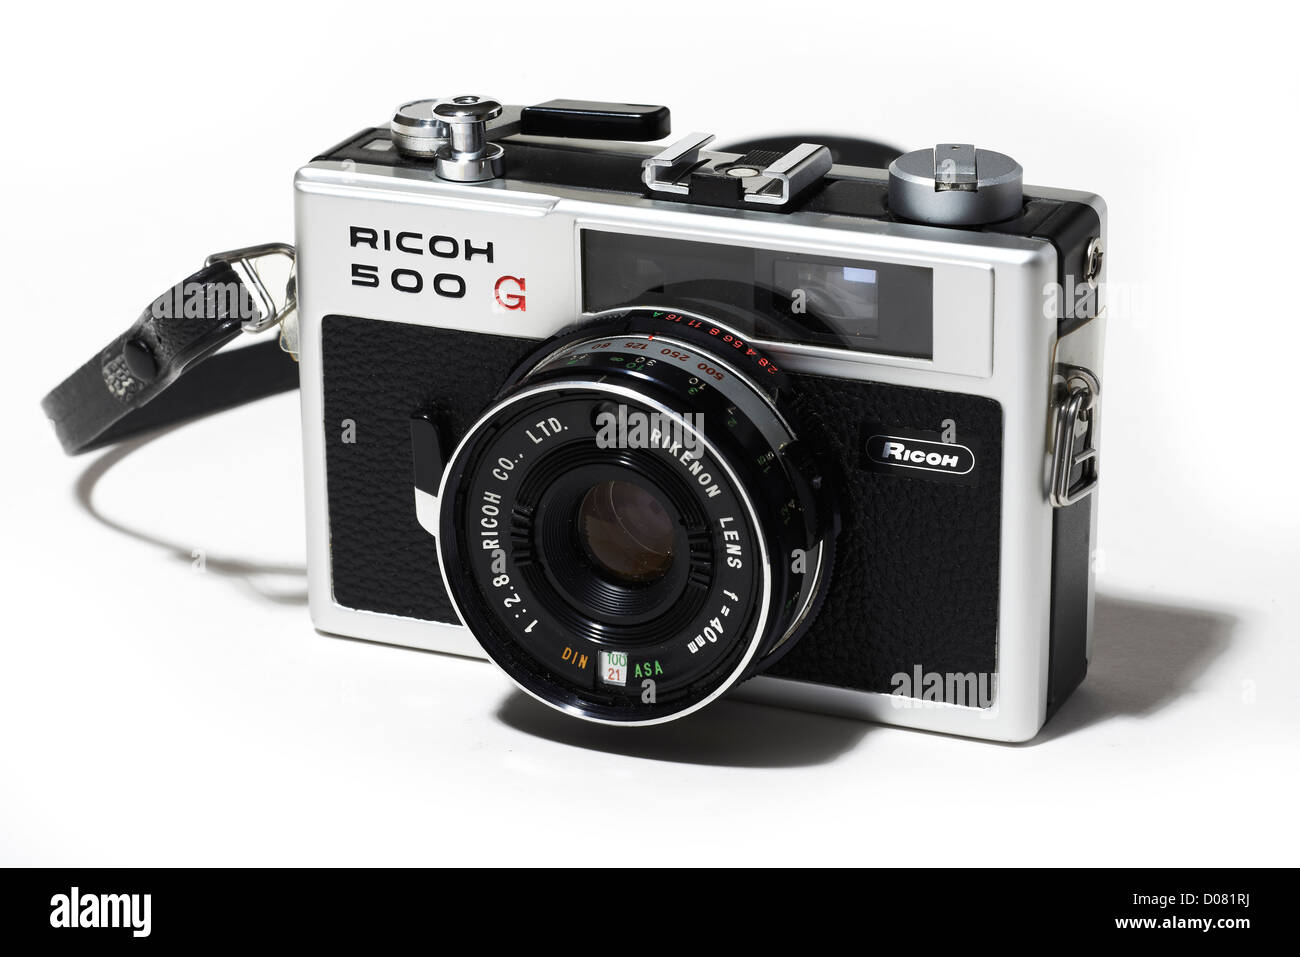 Ricoh 500G retrò fotocamera a pellicola 35mm Pellicola retrò fotocamera Ricoh Foto Stock